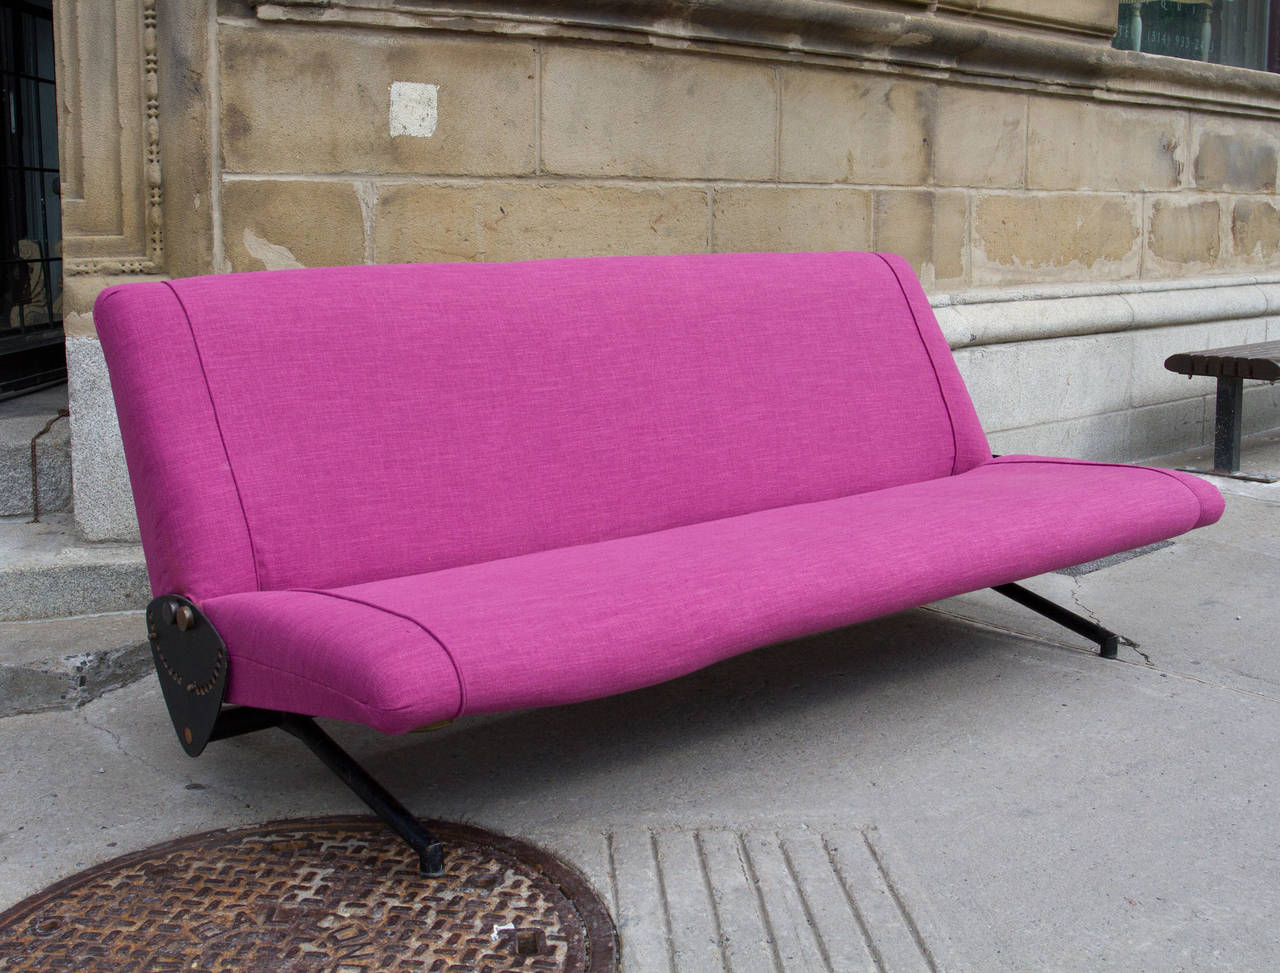 Modular folding D70 sofa by Osvaldo Borsani for Tecno. Cloth, foam and black-lacquered tubular steel frame.